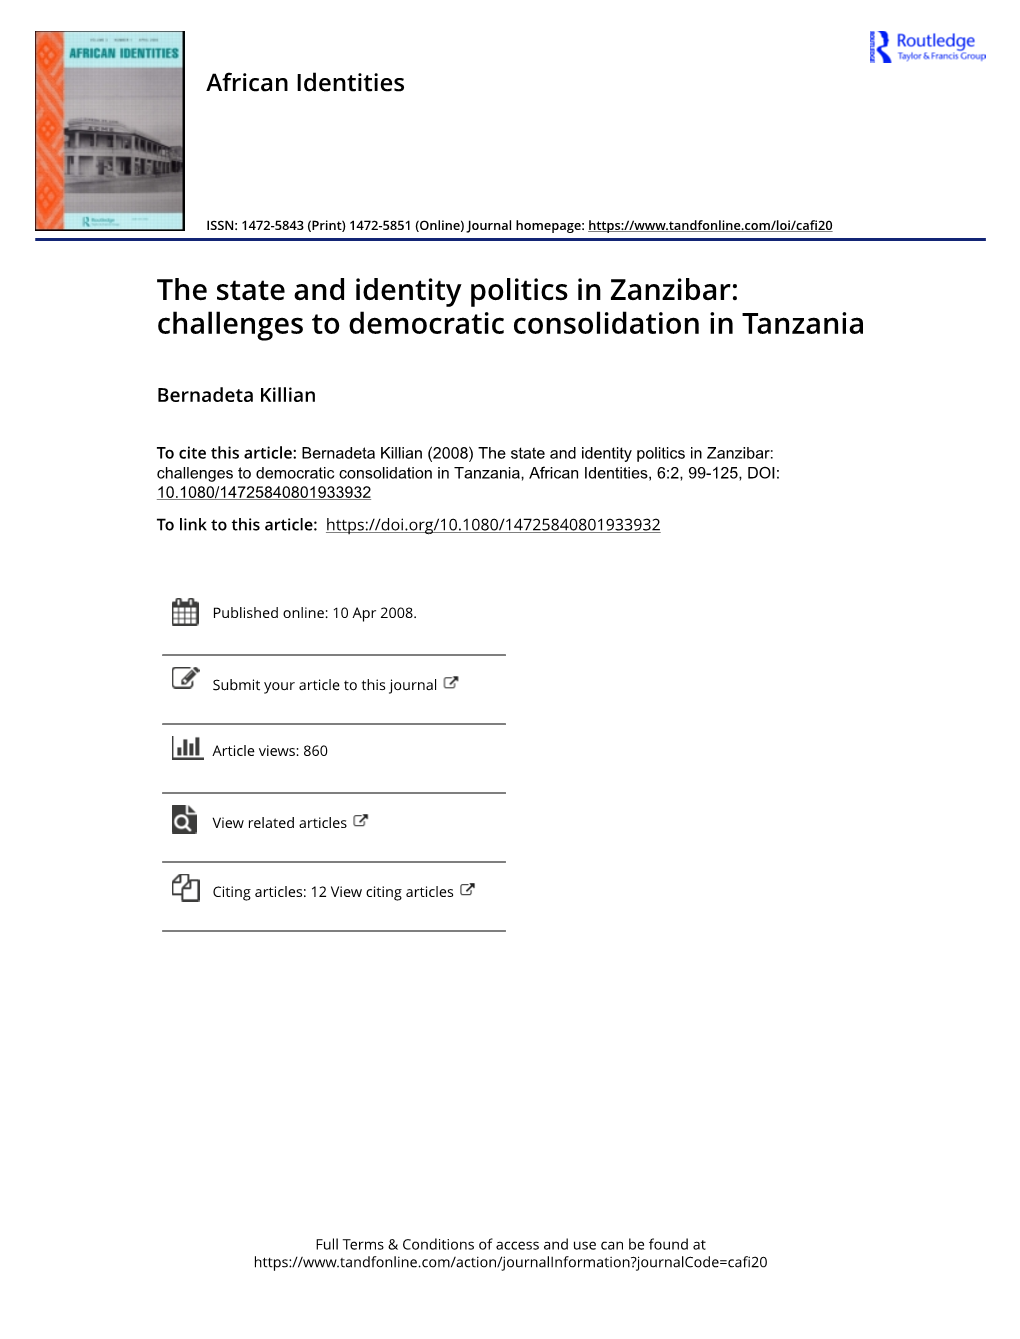 The State and Identity Politics in Zanzibar: Challenges to Democratic Consolidation in Tanzania